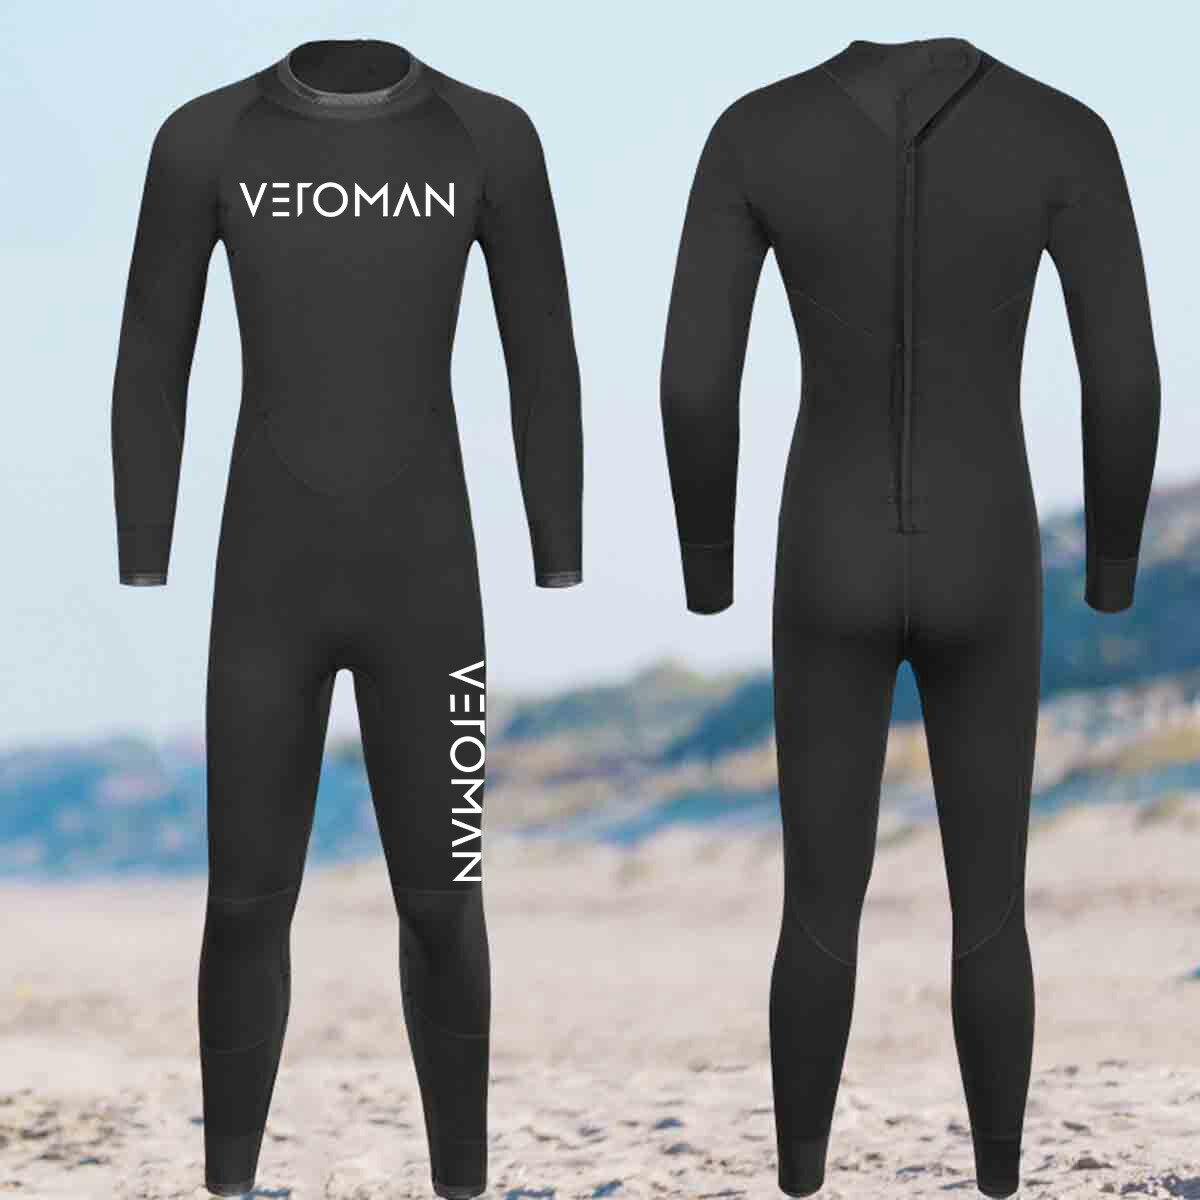 VeroMan メンズ ウェットスーツ ダイビングスーツ サーフィン シュノーケル フィッシング 潜水 素潜り UVカット 保温 速乾性 高弾性  ネオプレン素材 厚さ3mm :45731341289:VEROMAN-JP - 通販 - Yahoo!ショッピング